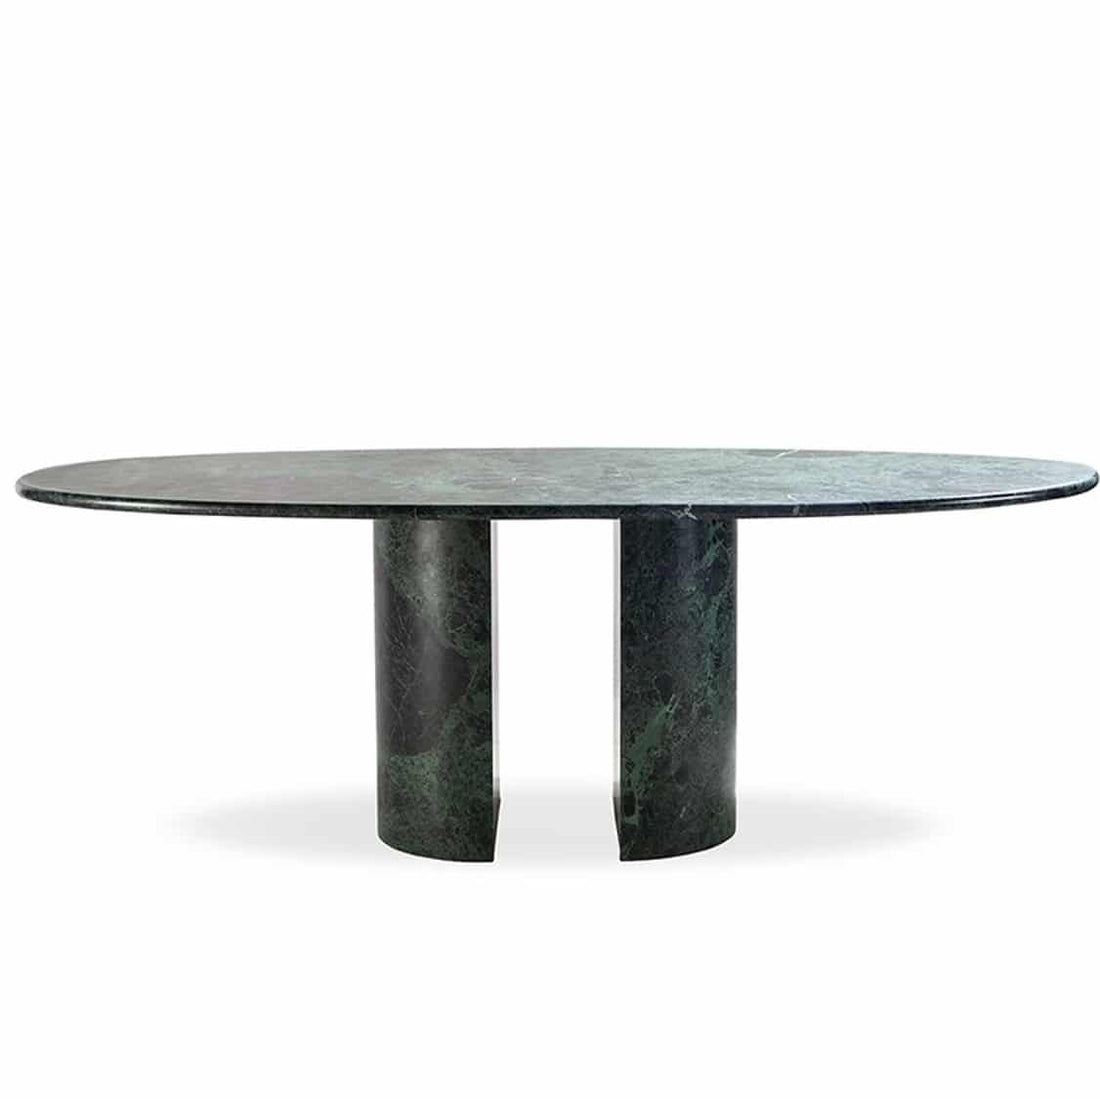 Dolmen table